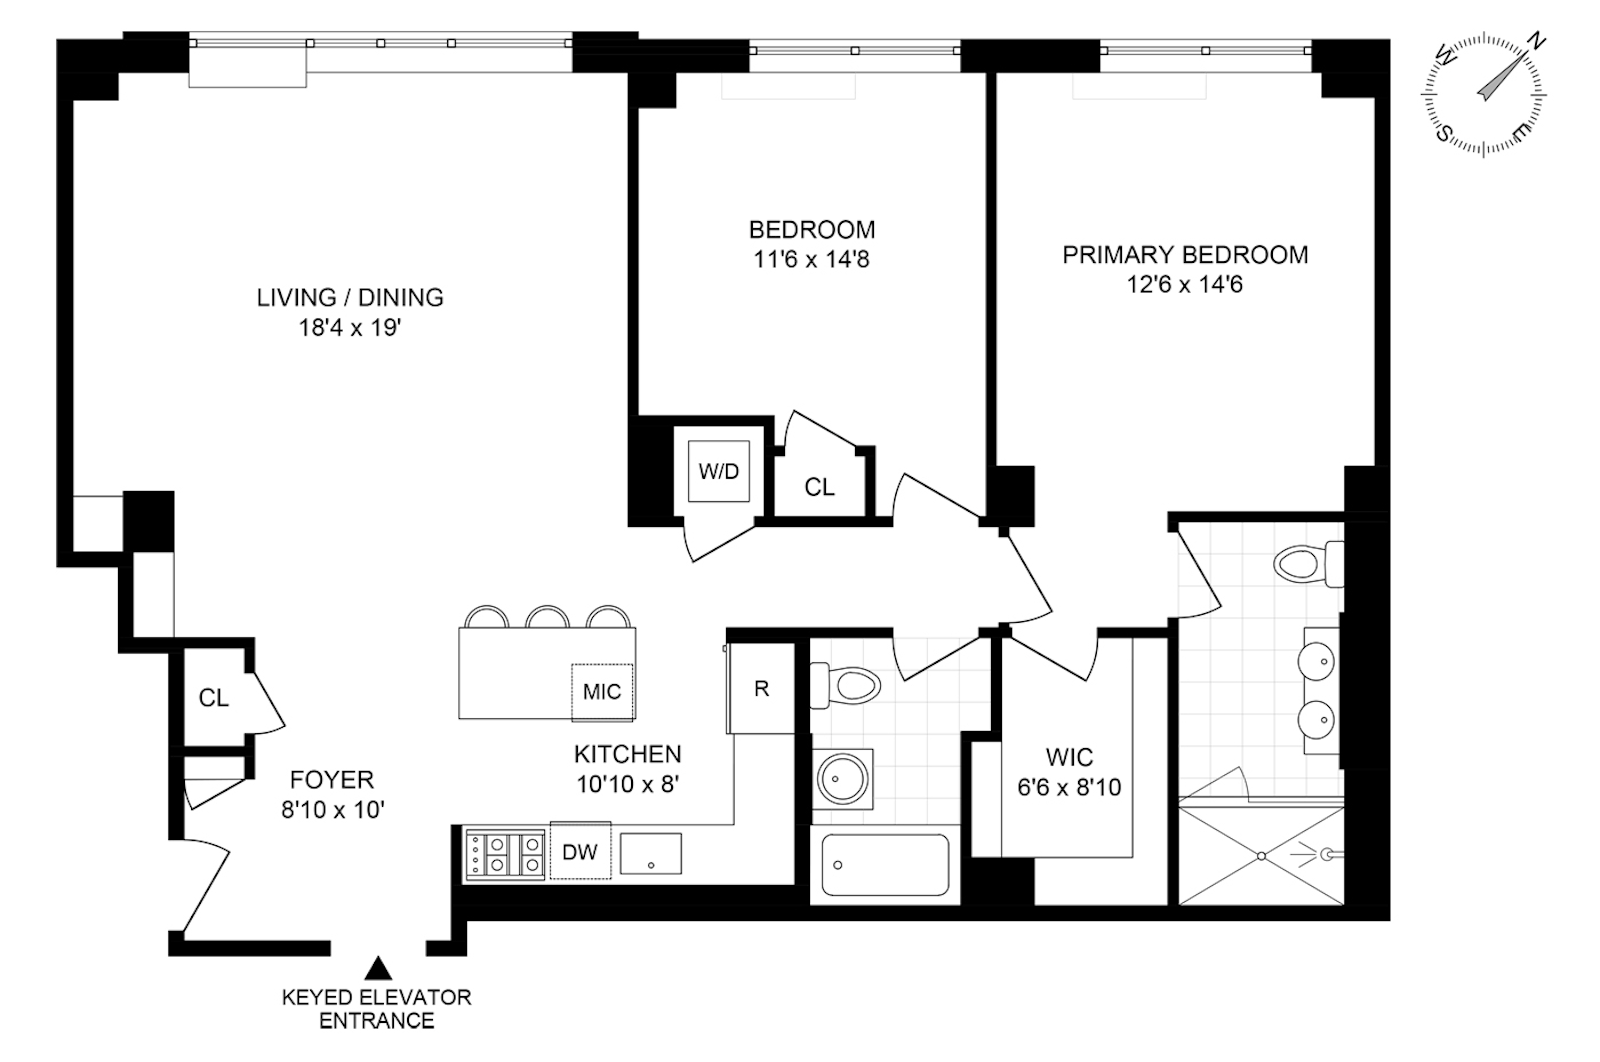 Floorplan for 50 Orchard Street, 7C